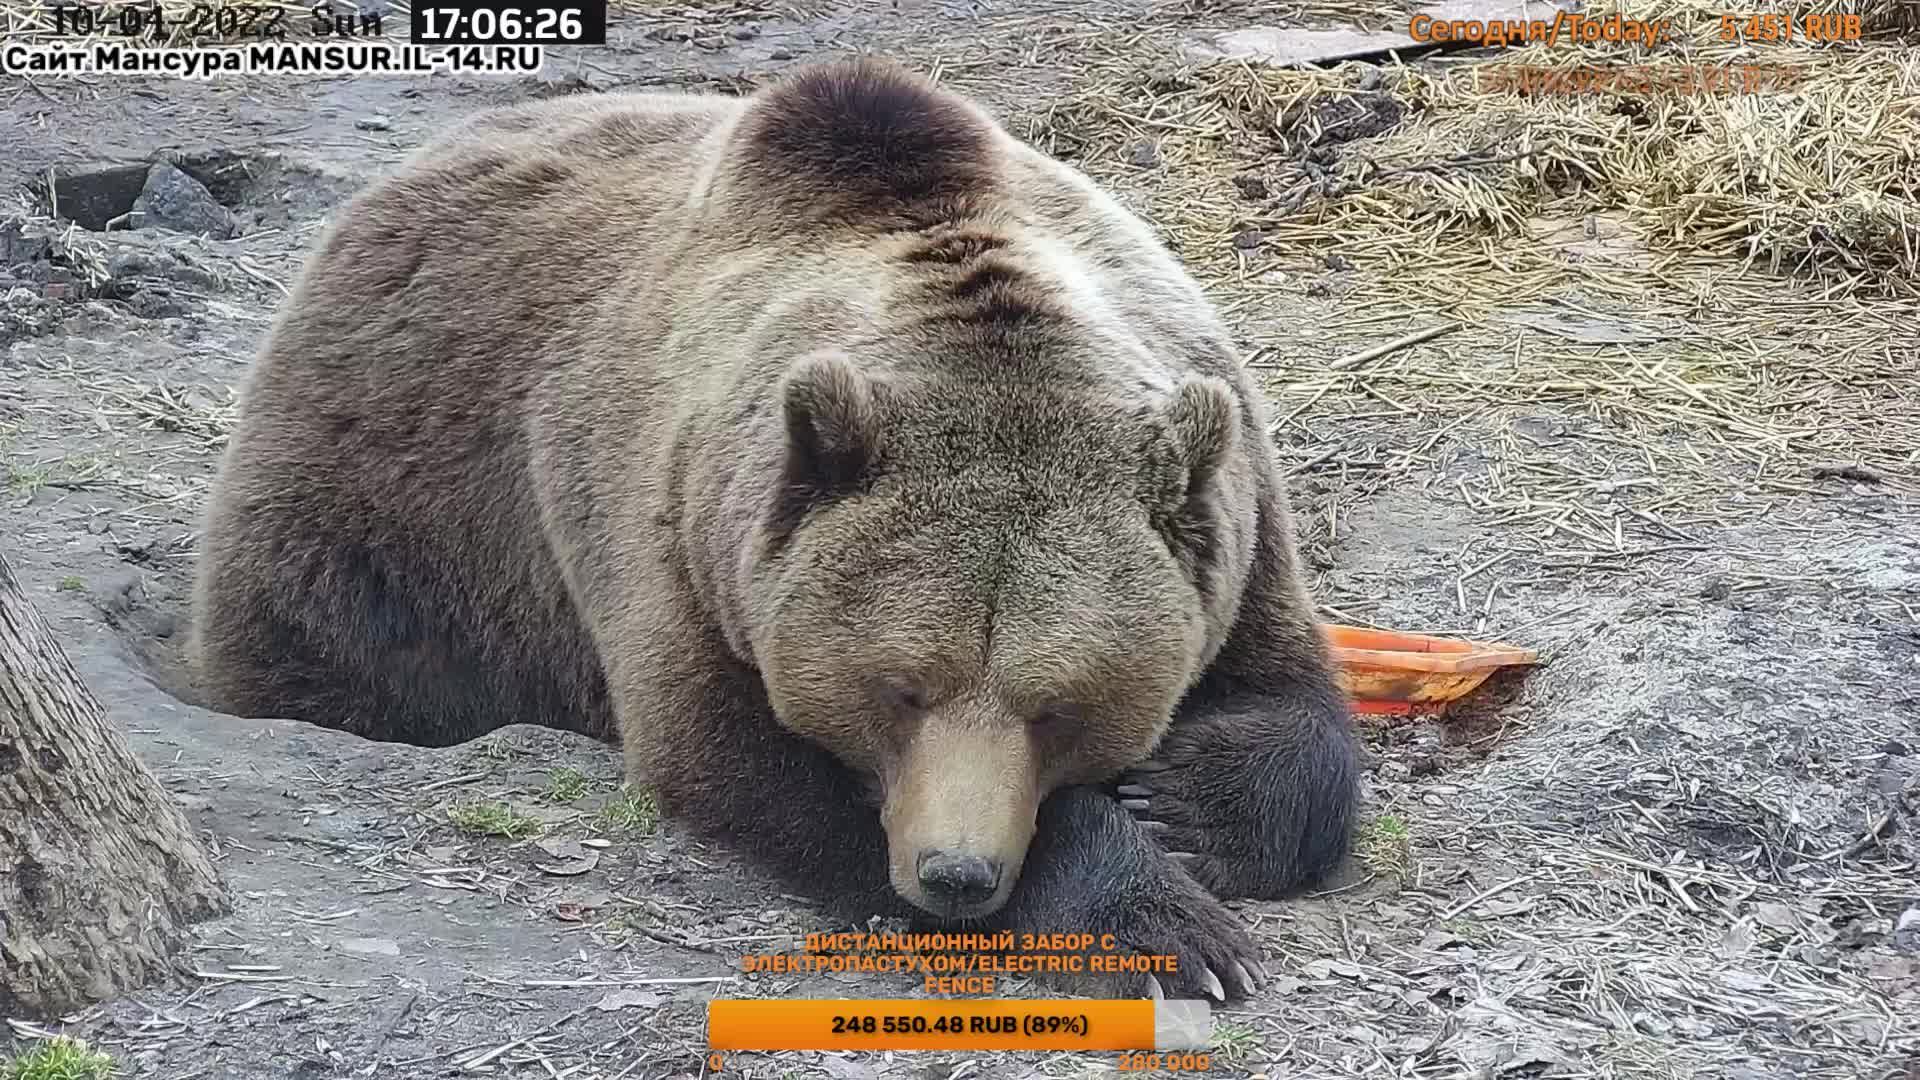 Прямая трансляция жизни бурого медведя Мансура 